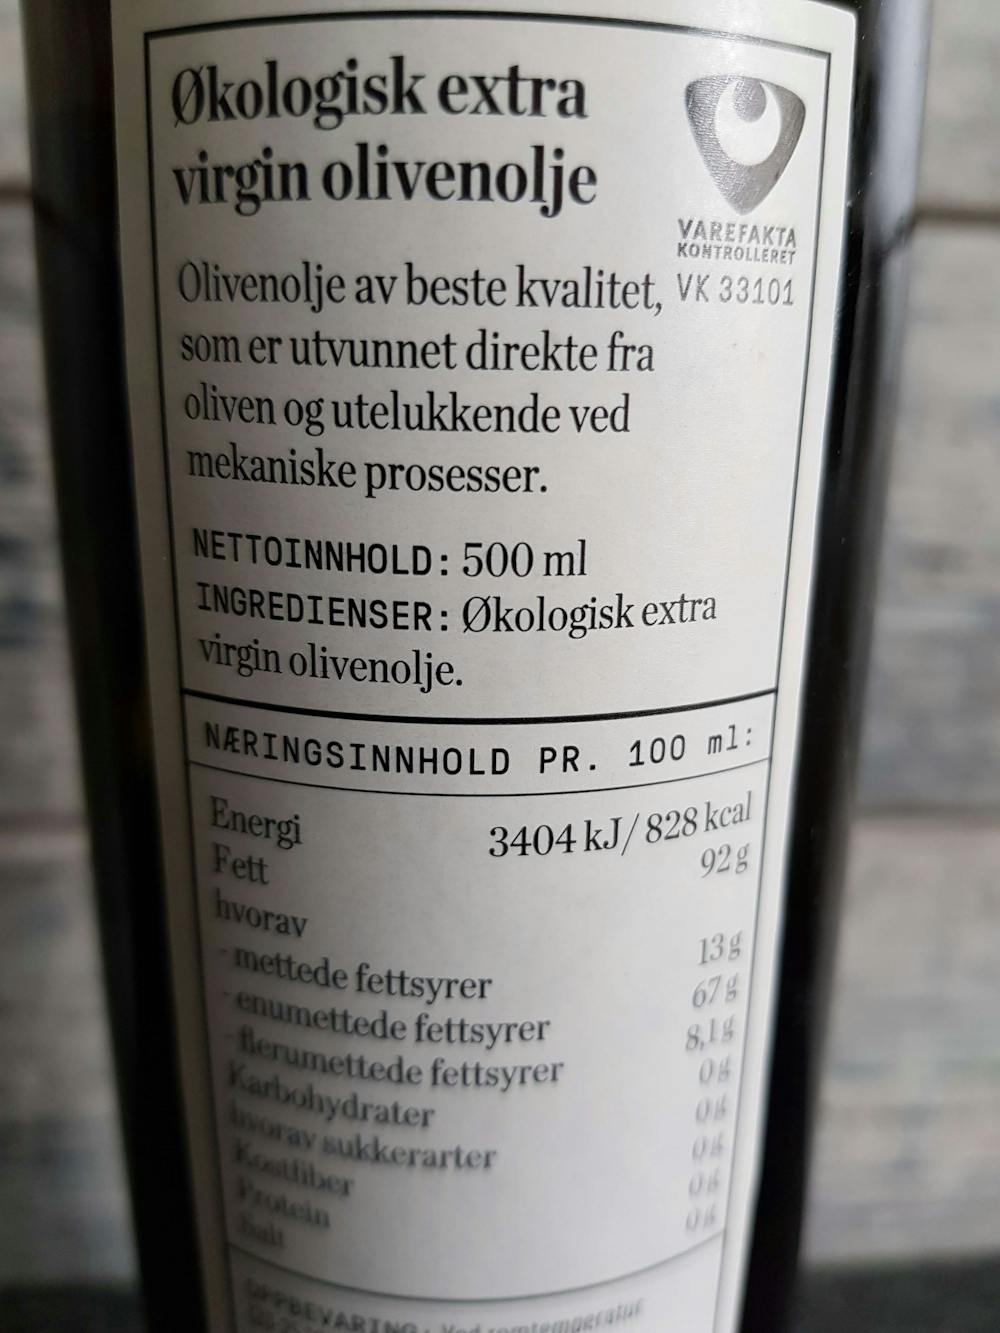 Ingredienslisten til Kolonihagen Økologisk olivenolje